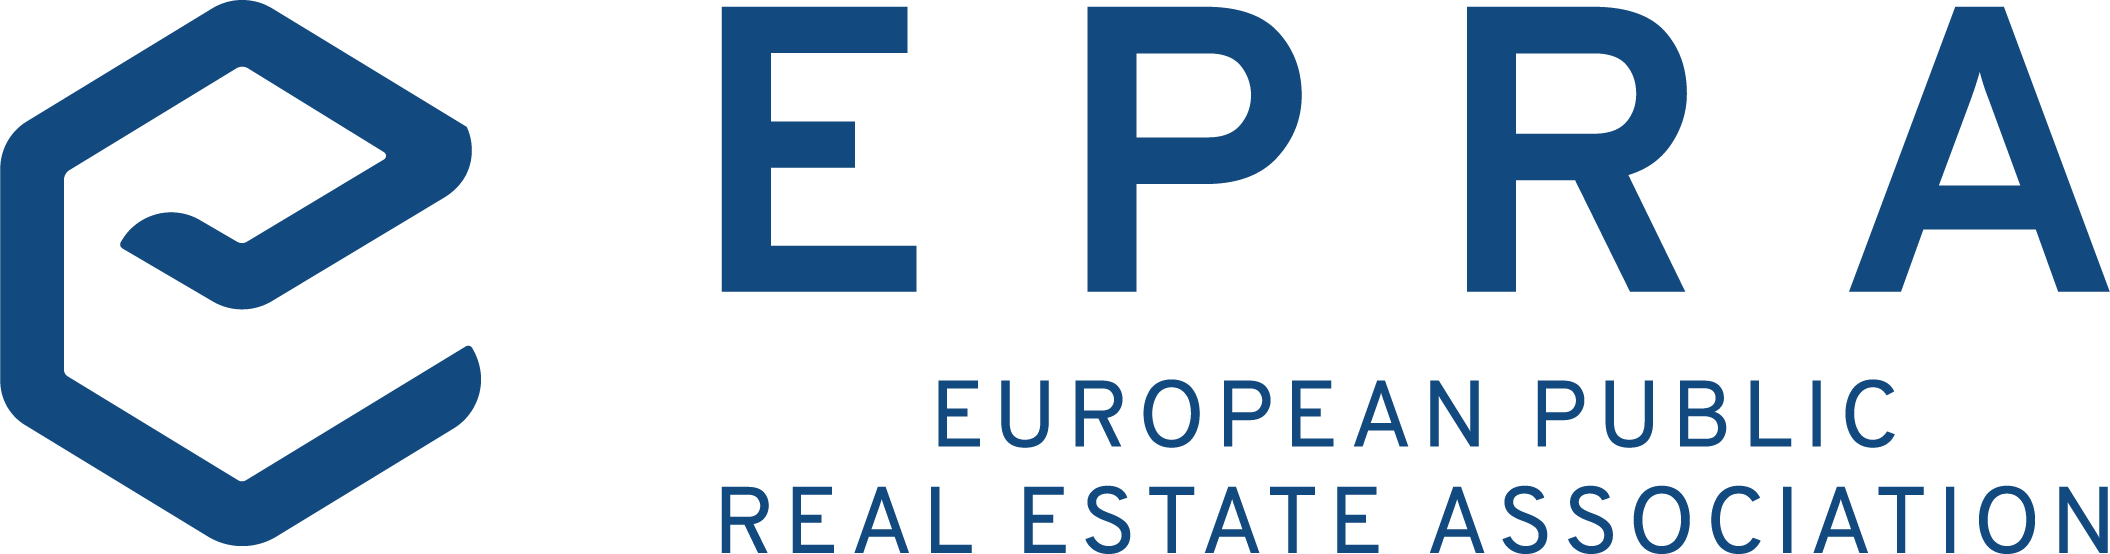 EPRA-logo-horizontal-lockup-blue.png